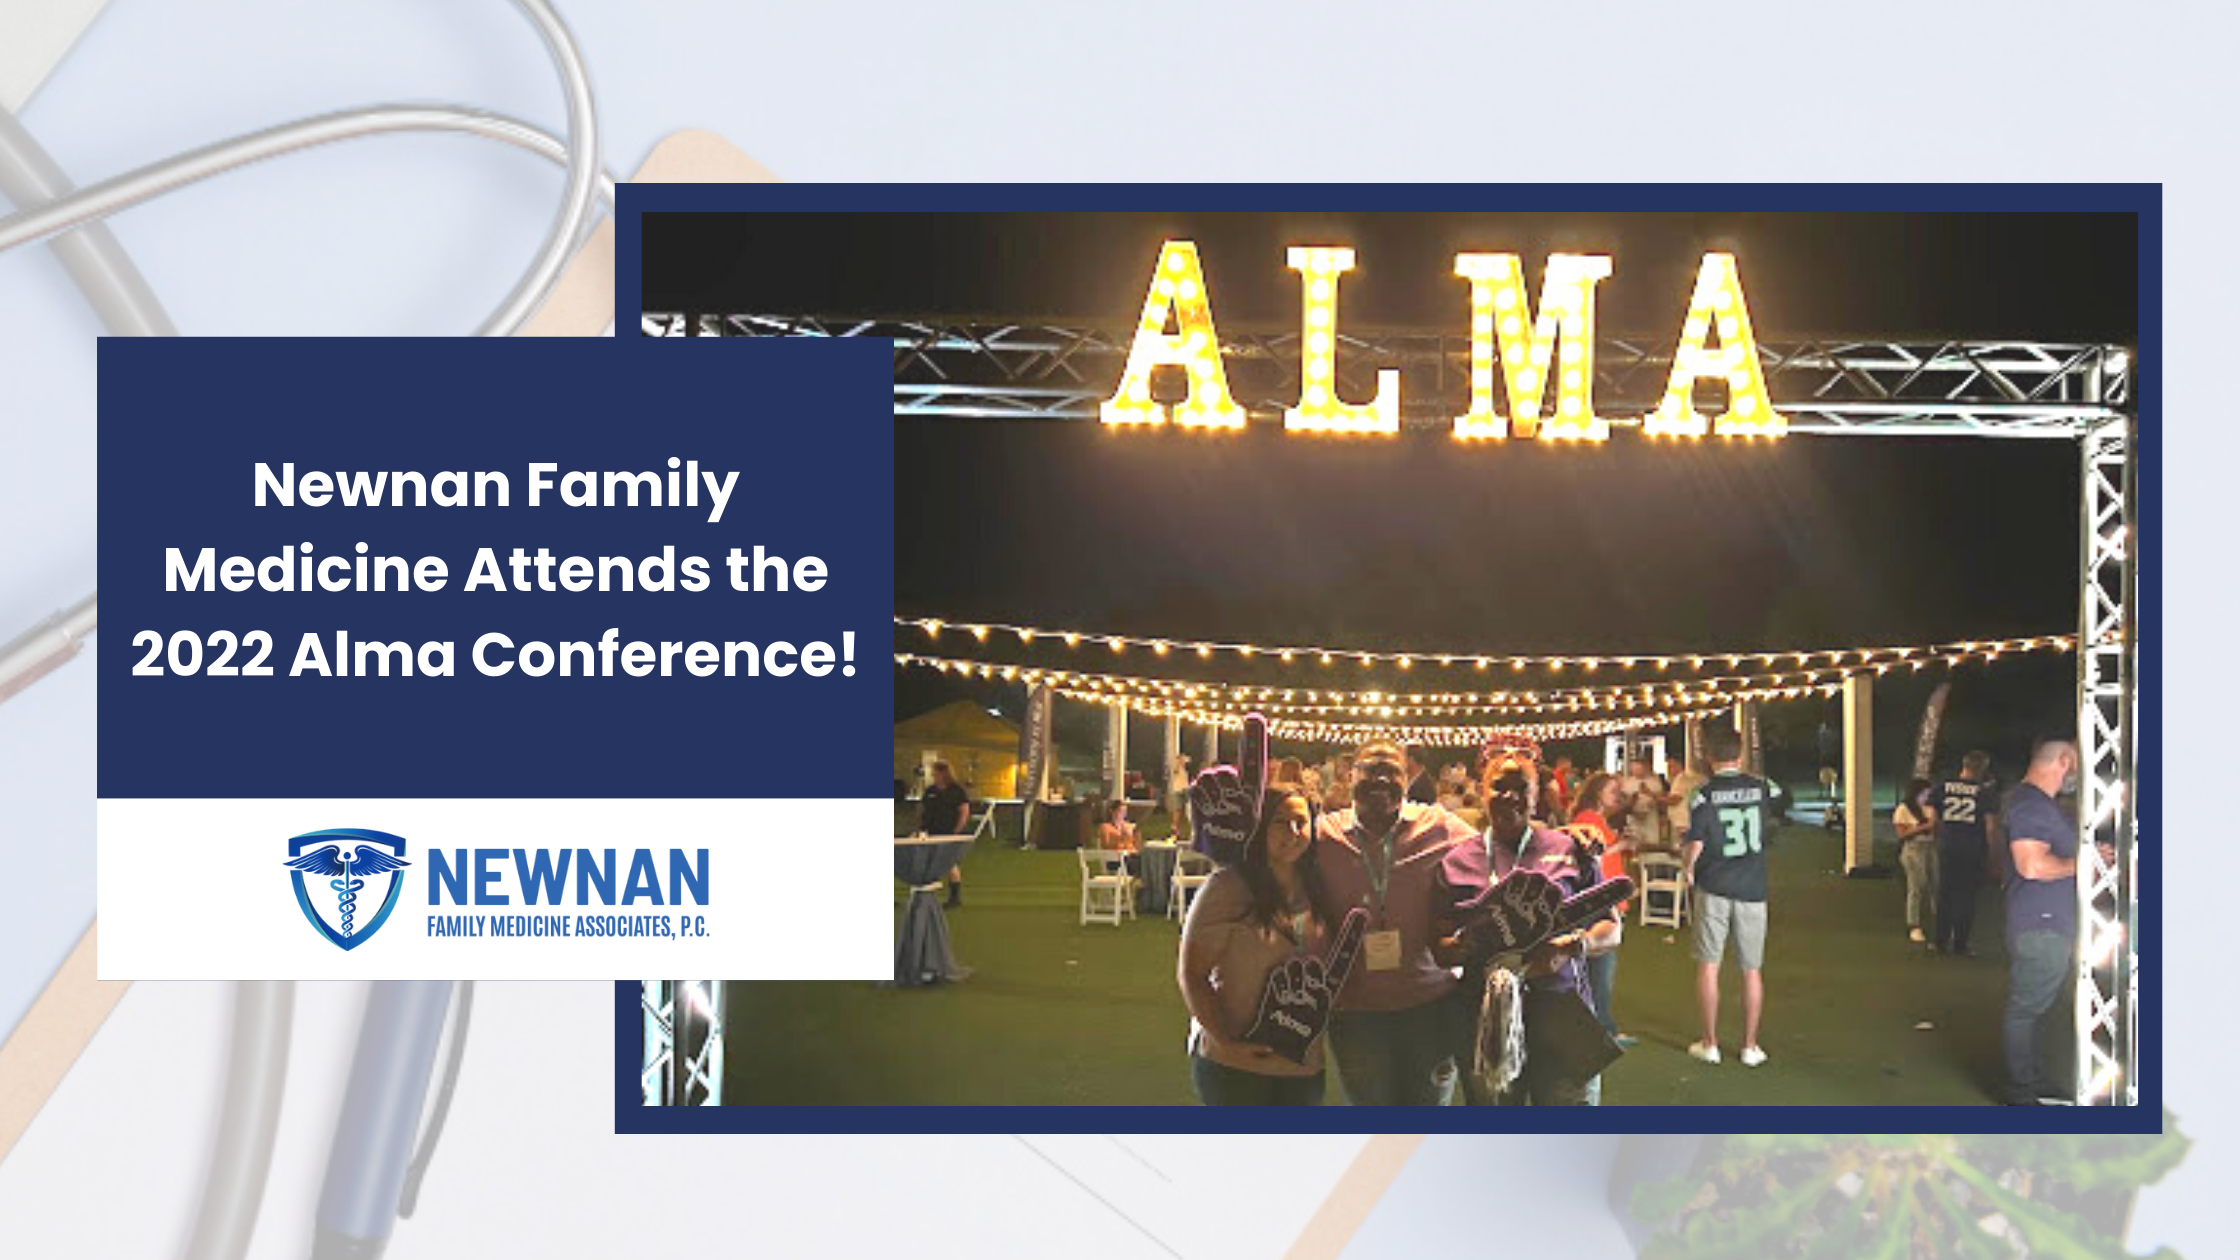 Newnan Family Medicine Attends the 2022 Alma Conference!